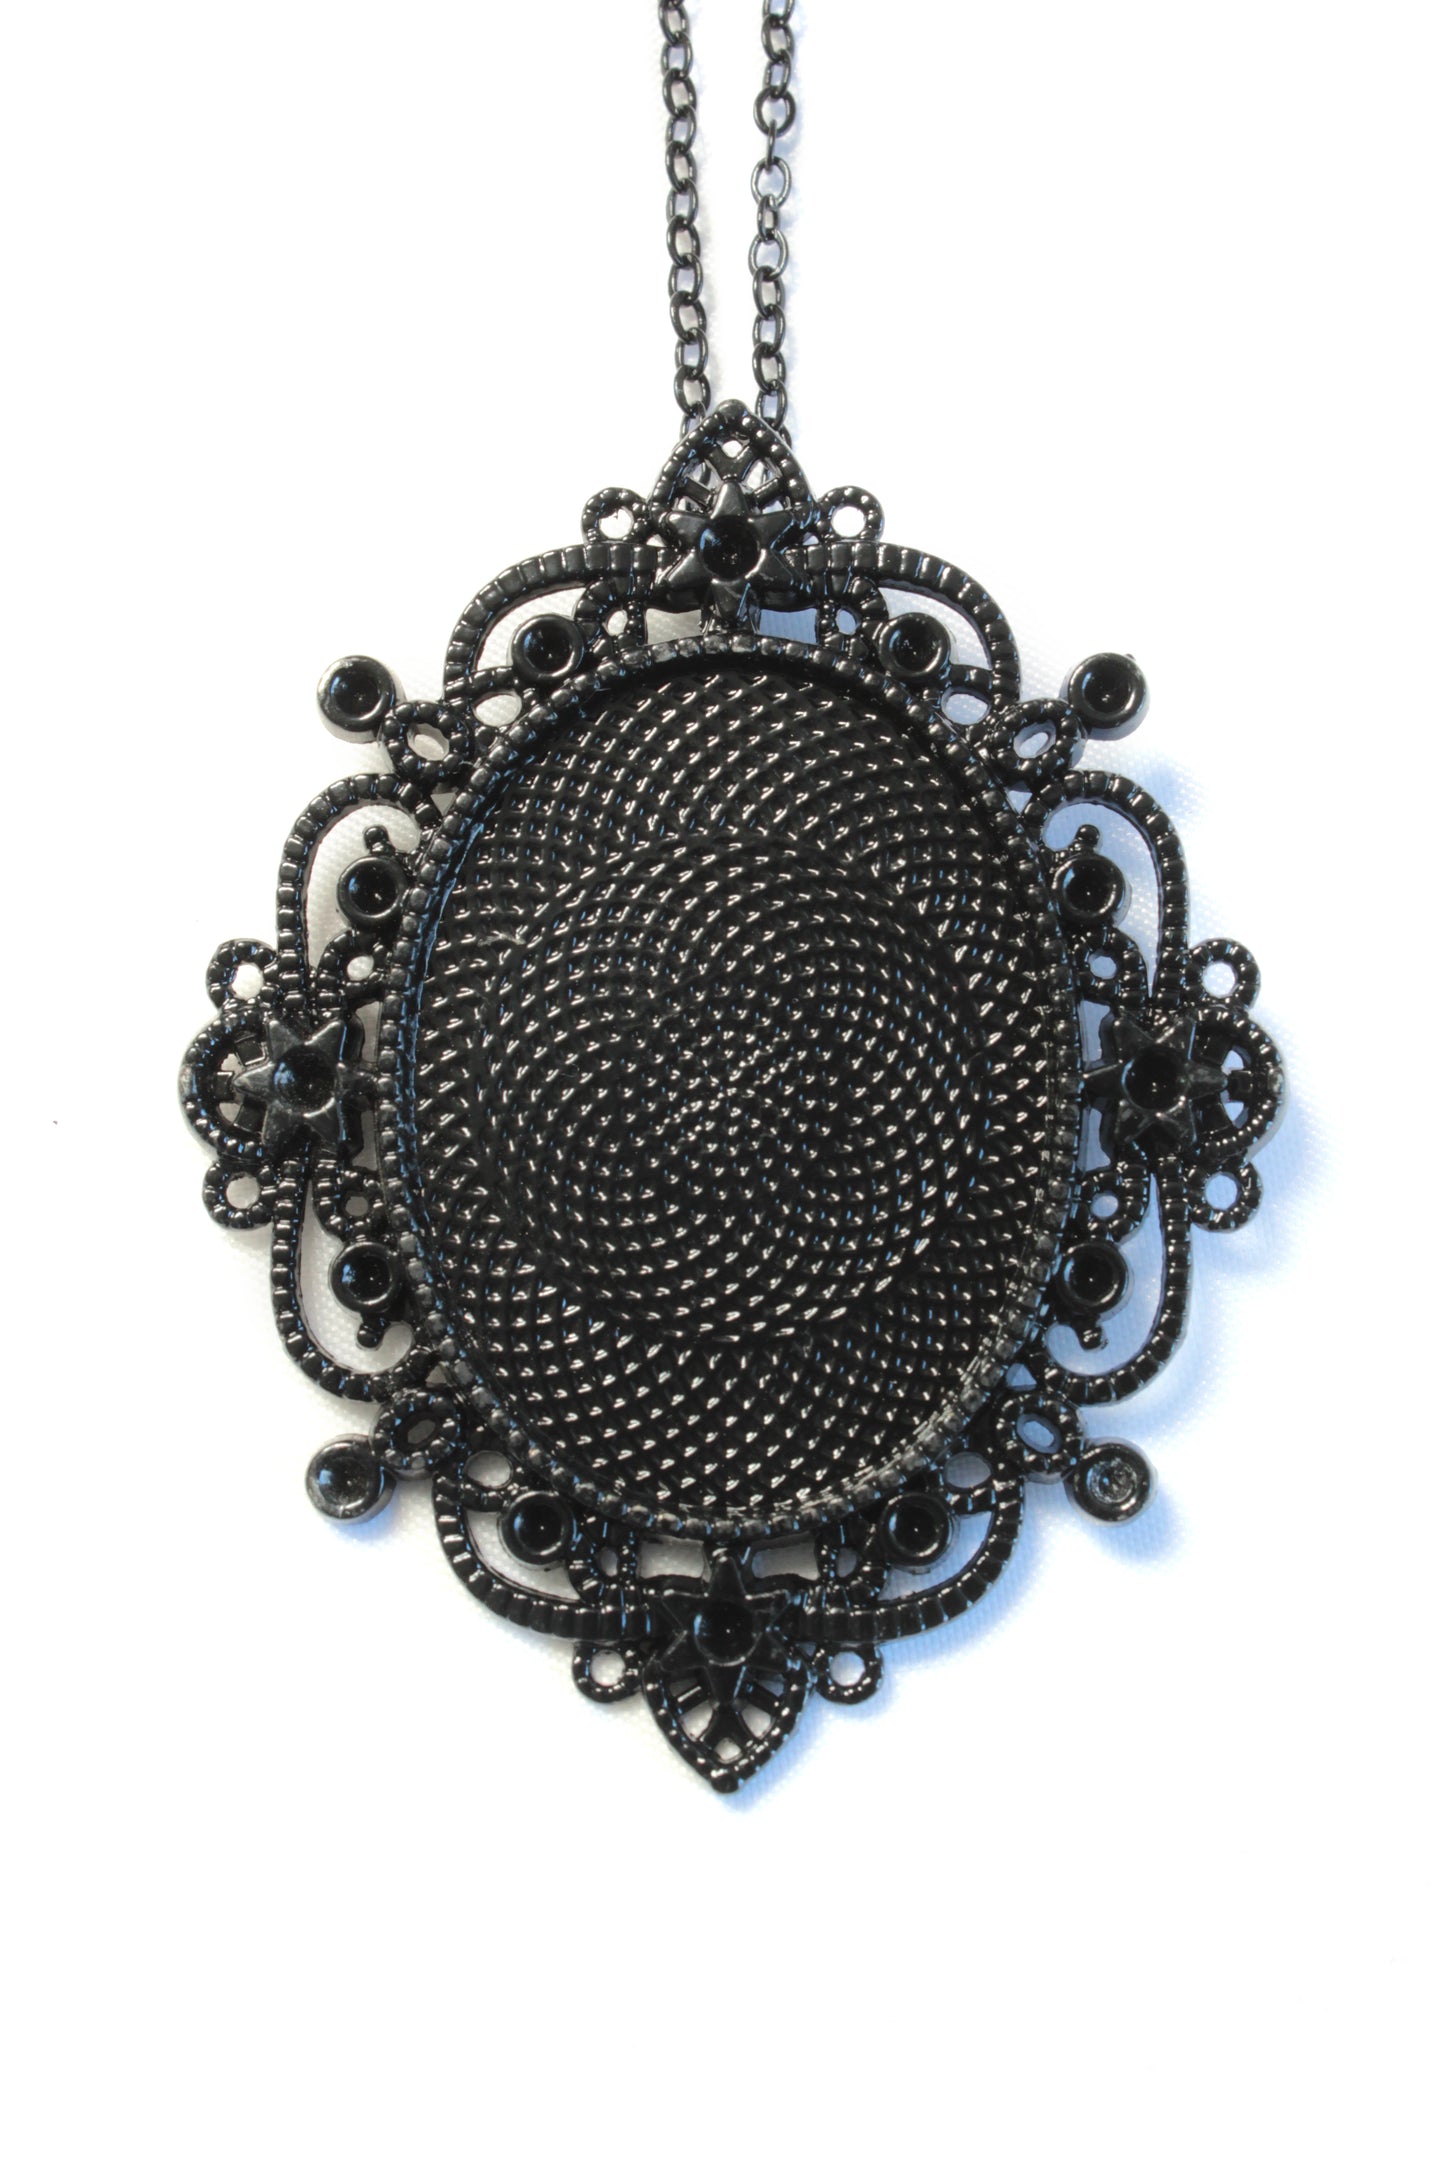 Reserved Listing for Boaz Yakin | Embroidery Custom Pet Portrait | Black Oval Pendant